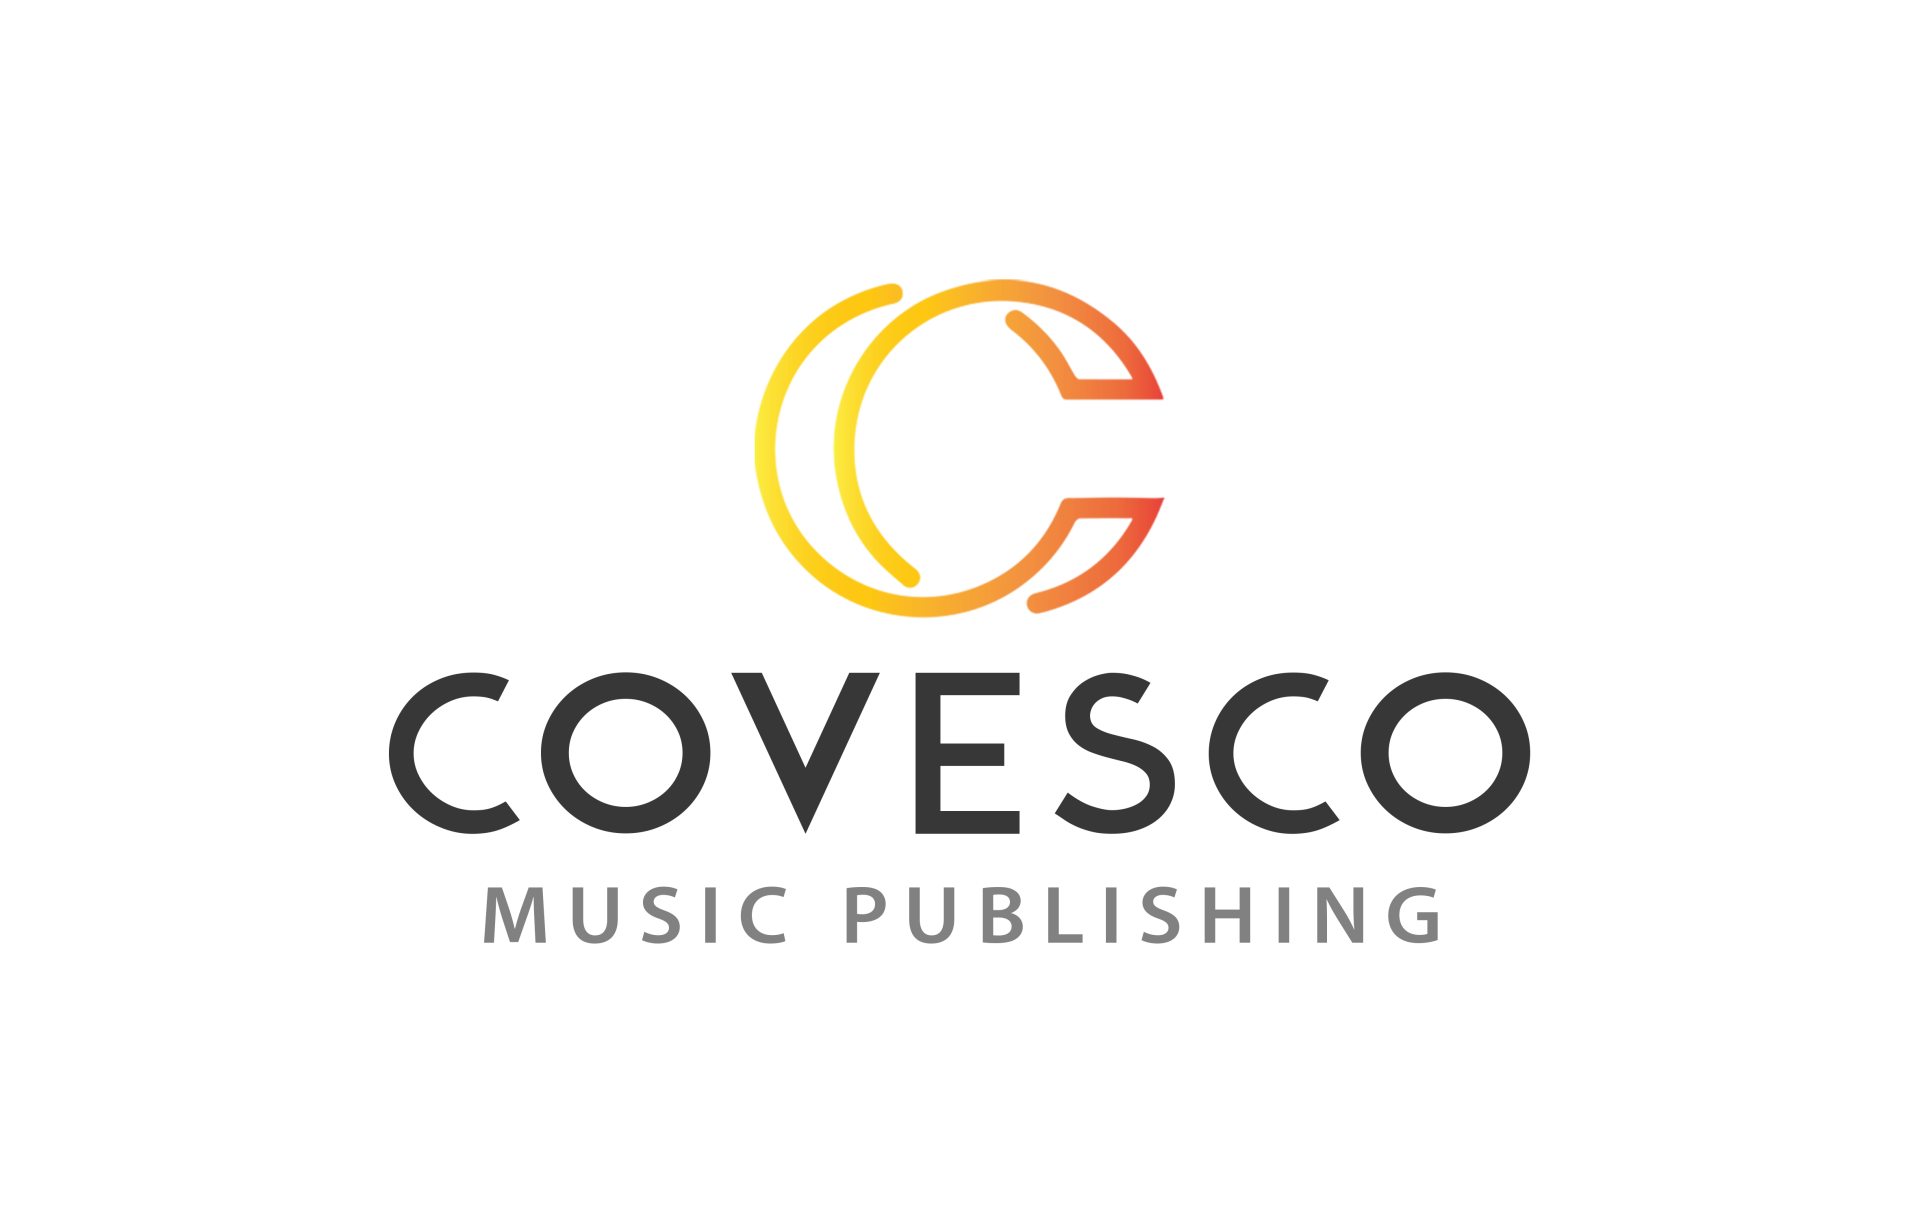 Edition Covesco Music Publishing